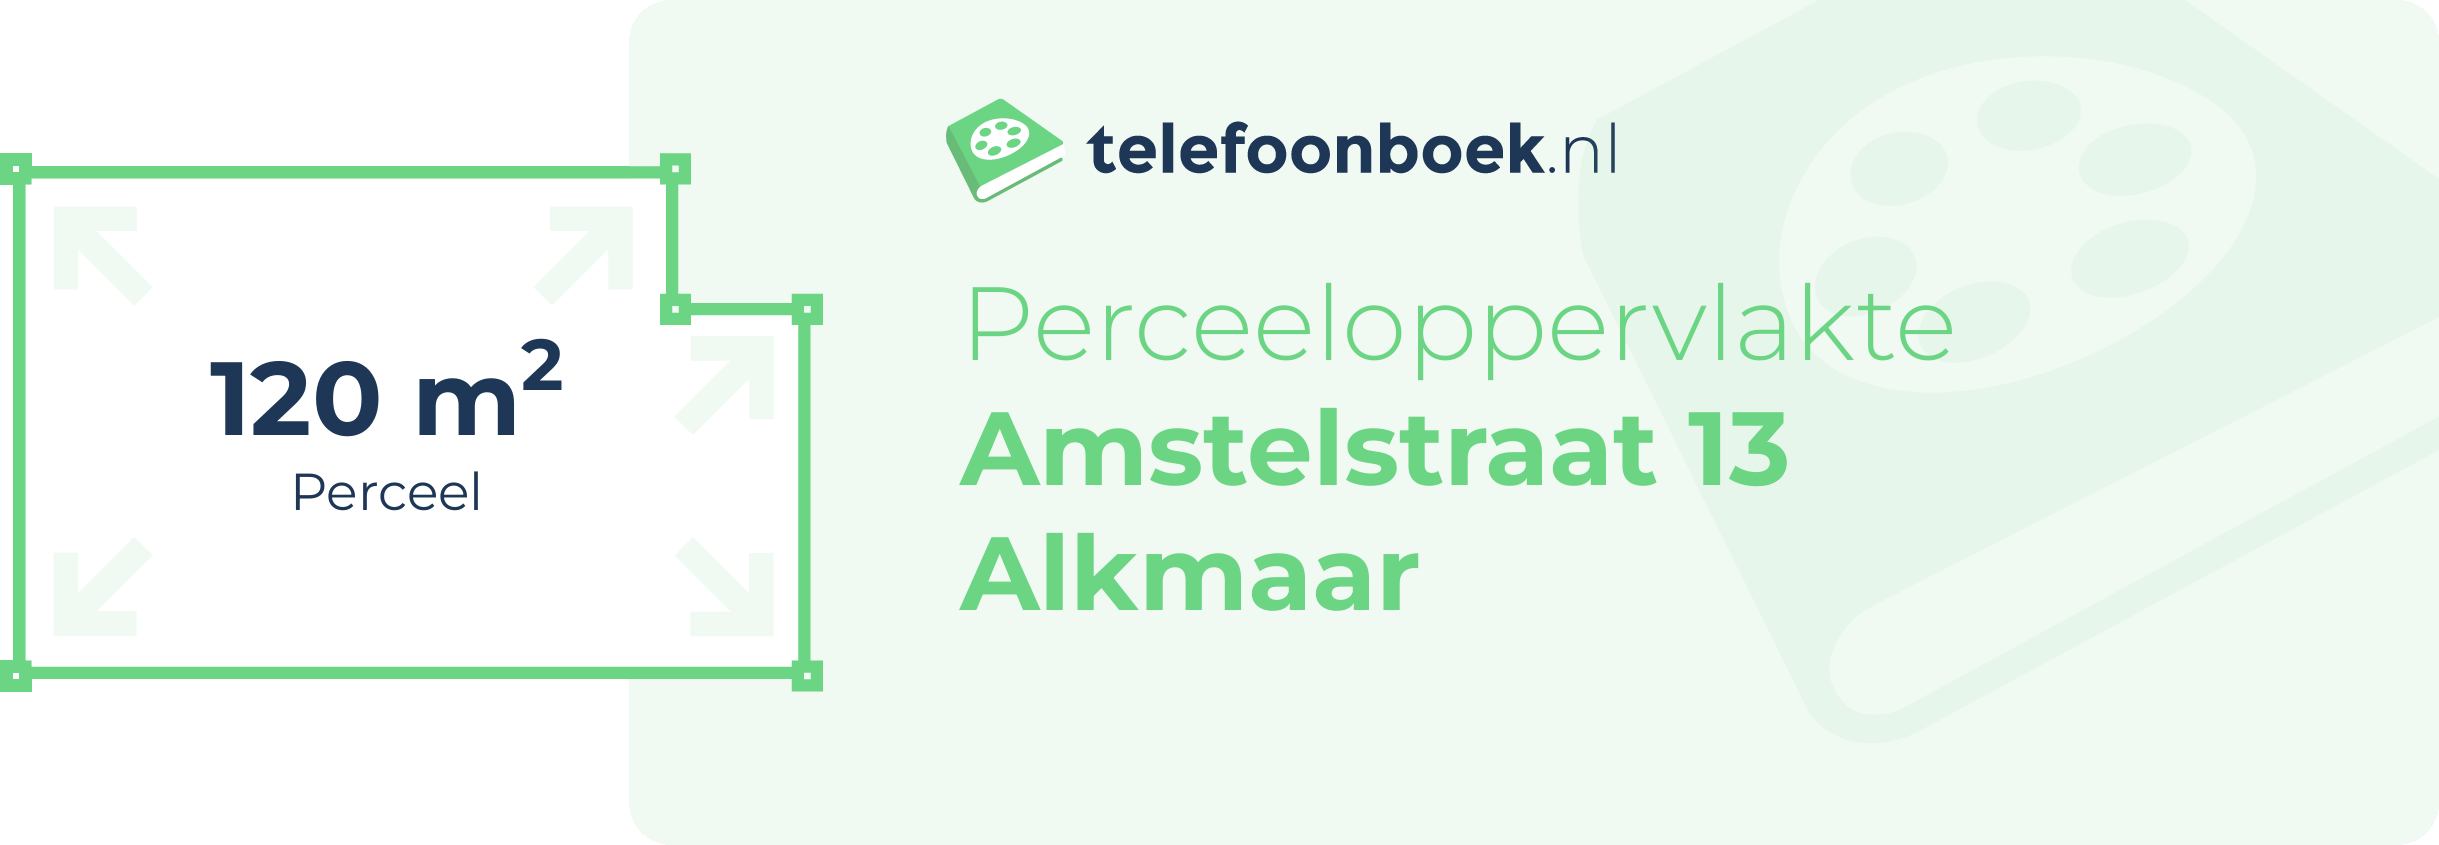 Perceeloppervlakte Amstelstraat 13 Alkmaar